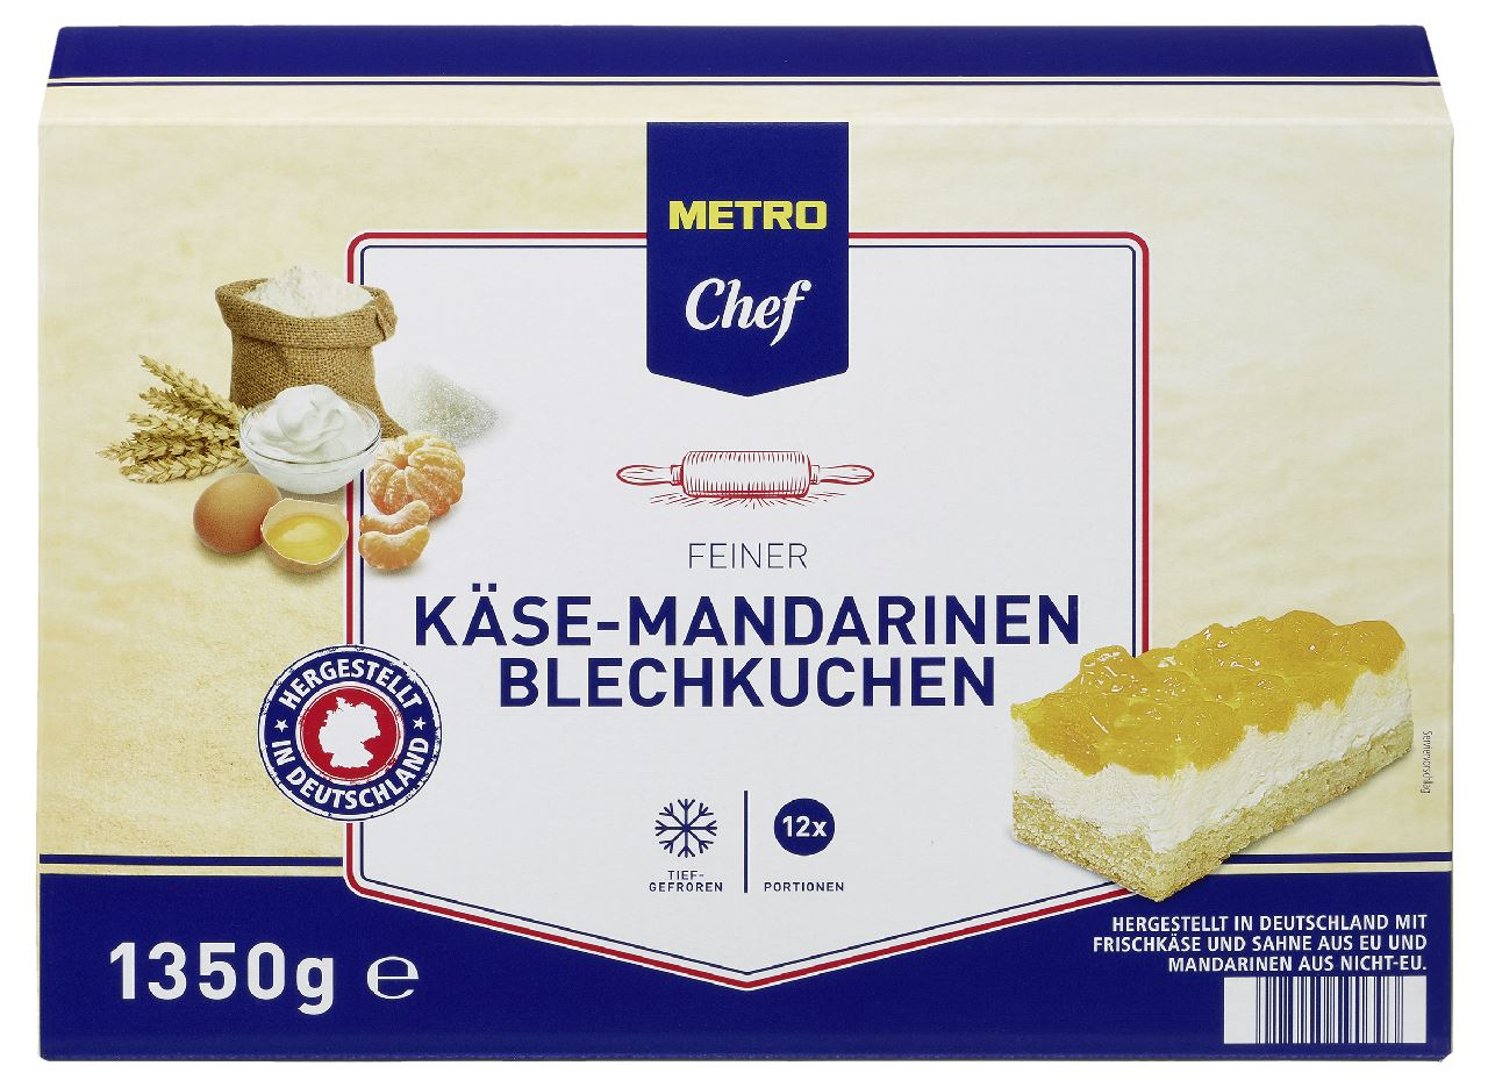 METRO Chef - Käse-Mandarinen Blechkuchen tiefgefroren 12 Portionen - 1,35 kg Packung